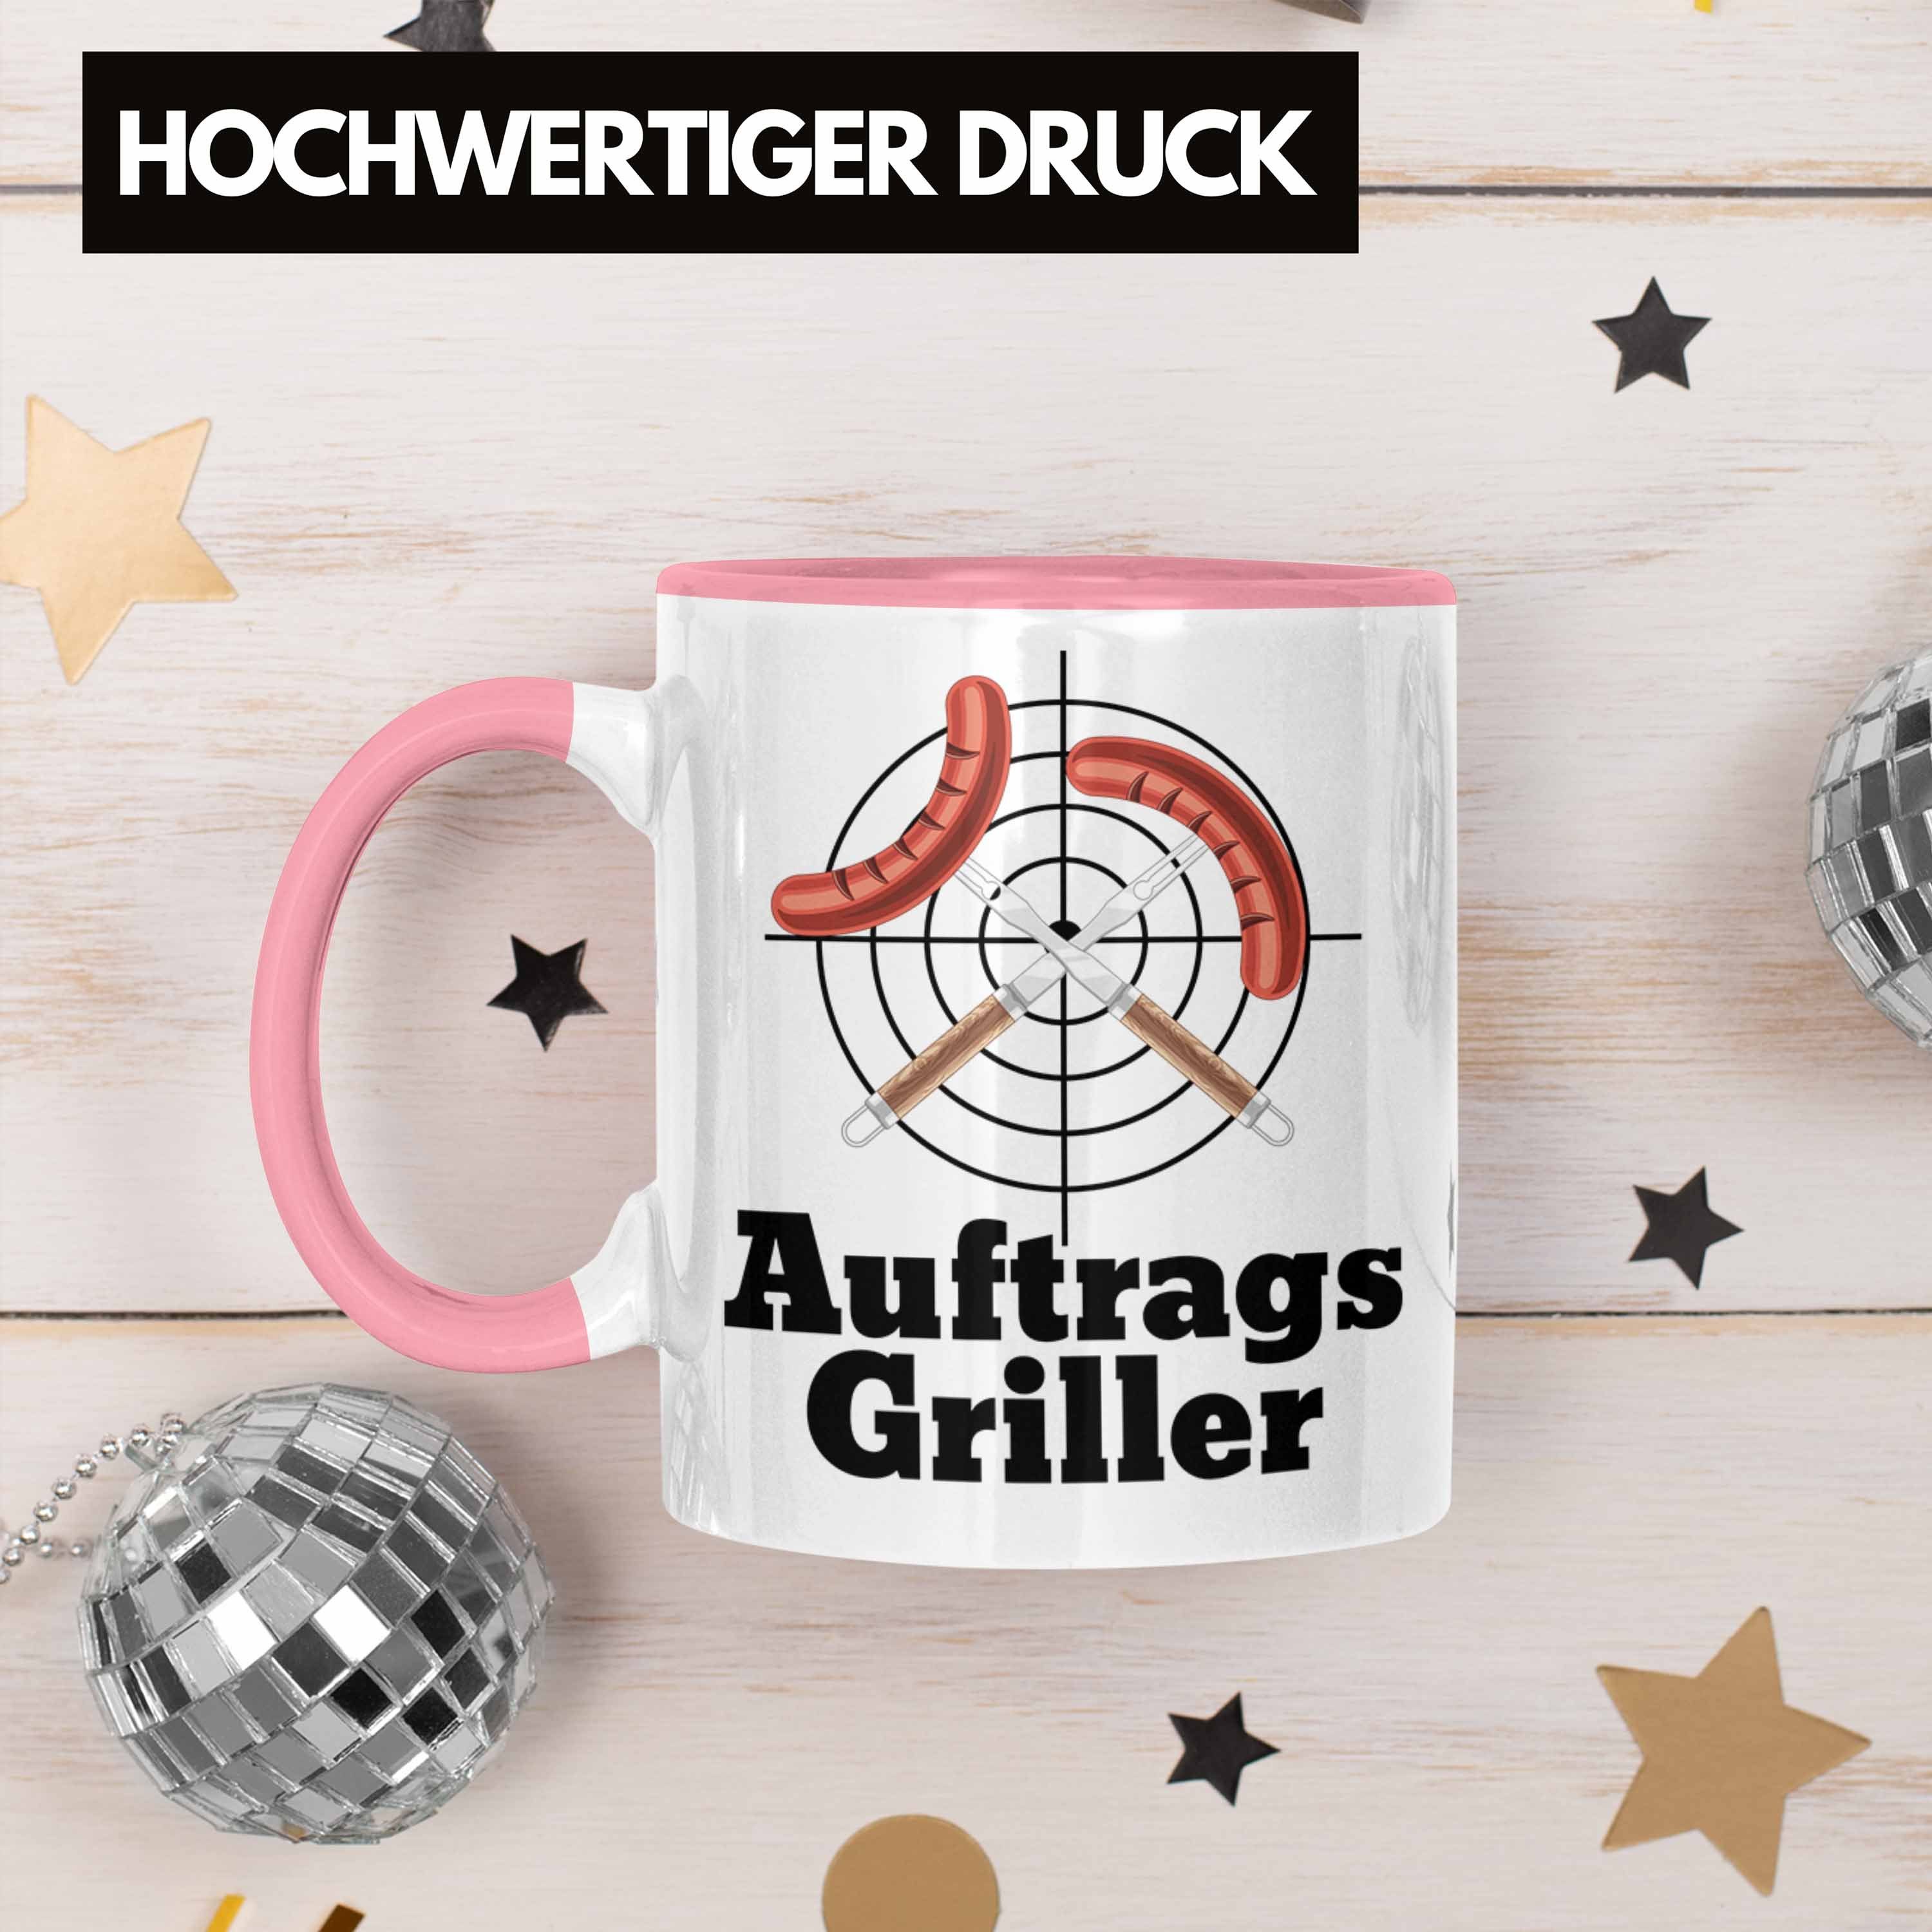 Tasse Geschenk Tasse Männer Kaffee-Becher Grillmeister Trendation Rosa Auftrags-Griller Gril